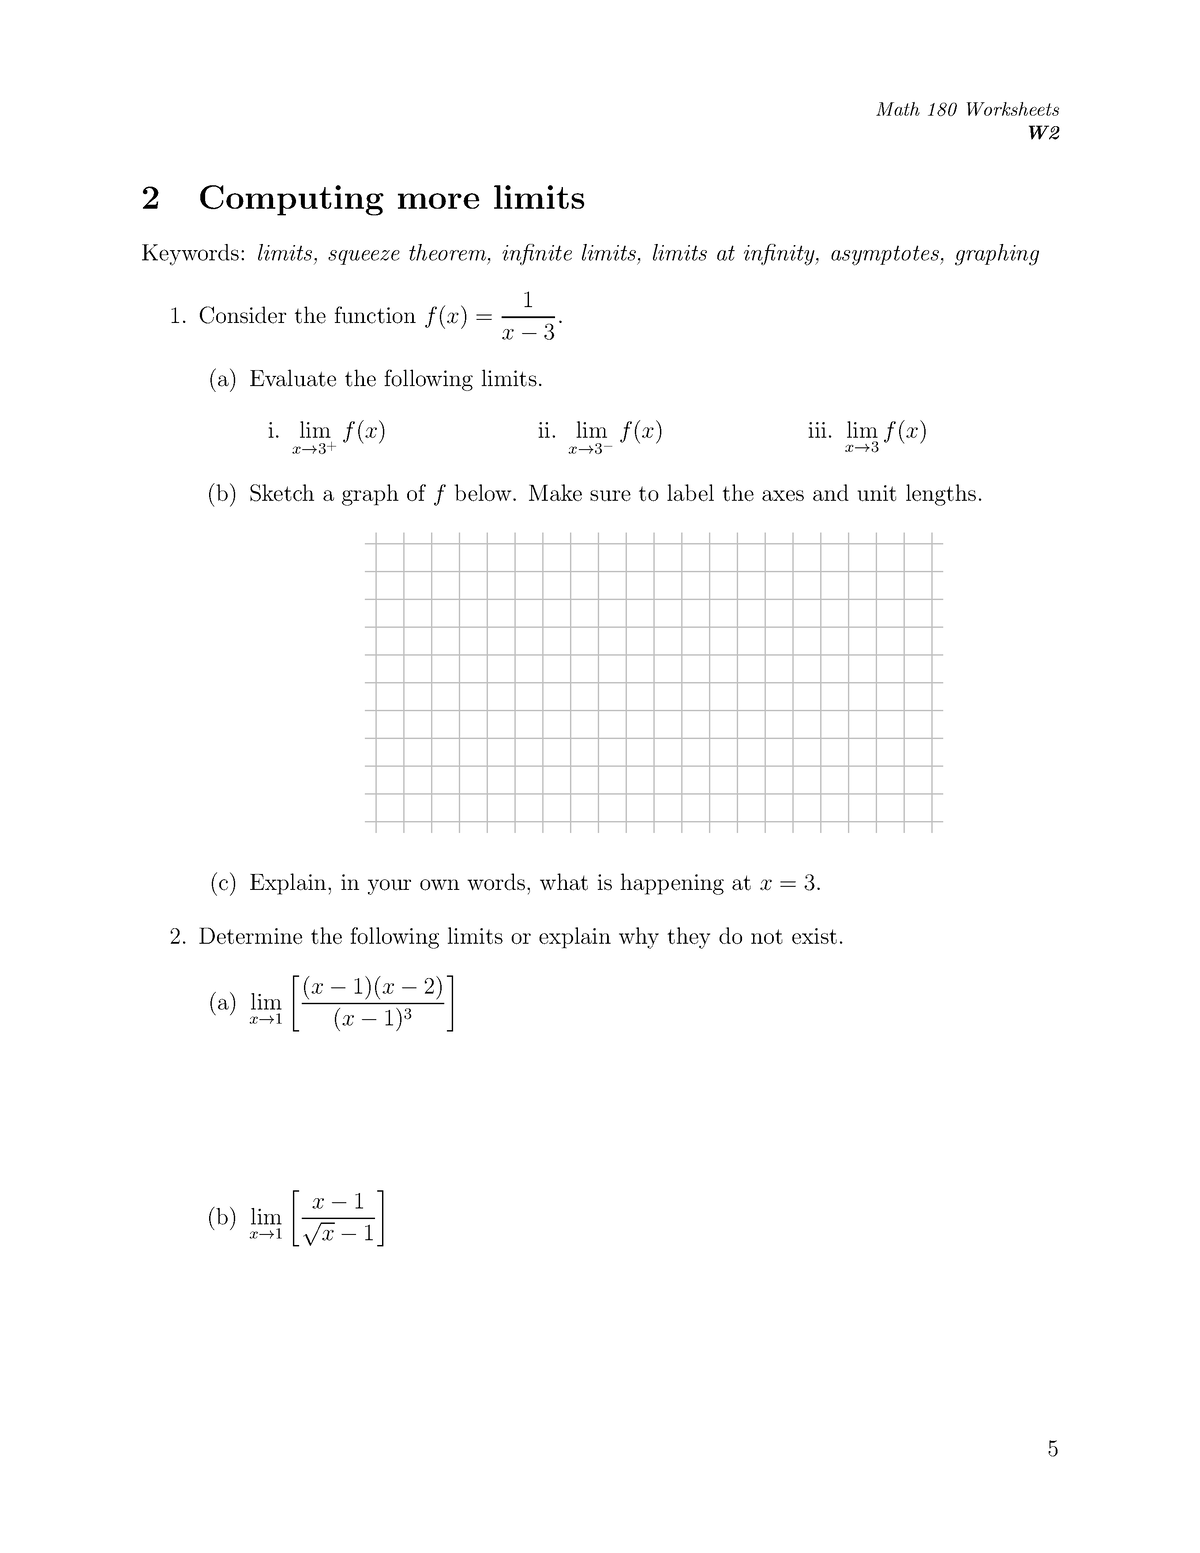 math-180-worksheets-week-3-w-2-computing-more-limits-keywords-limits-squeeze-theorem